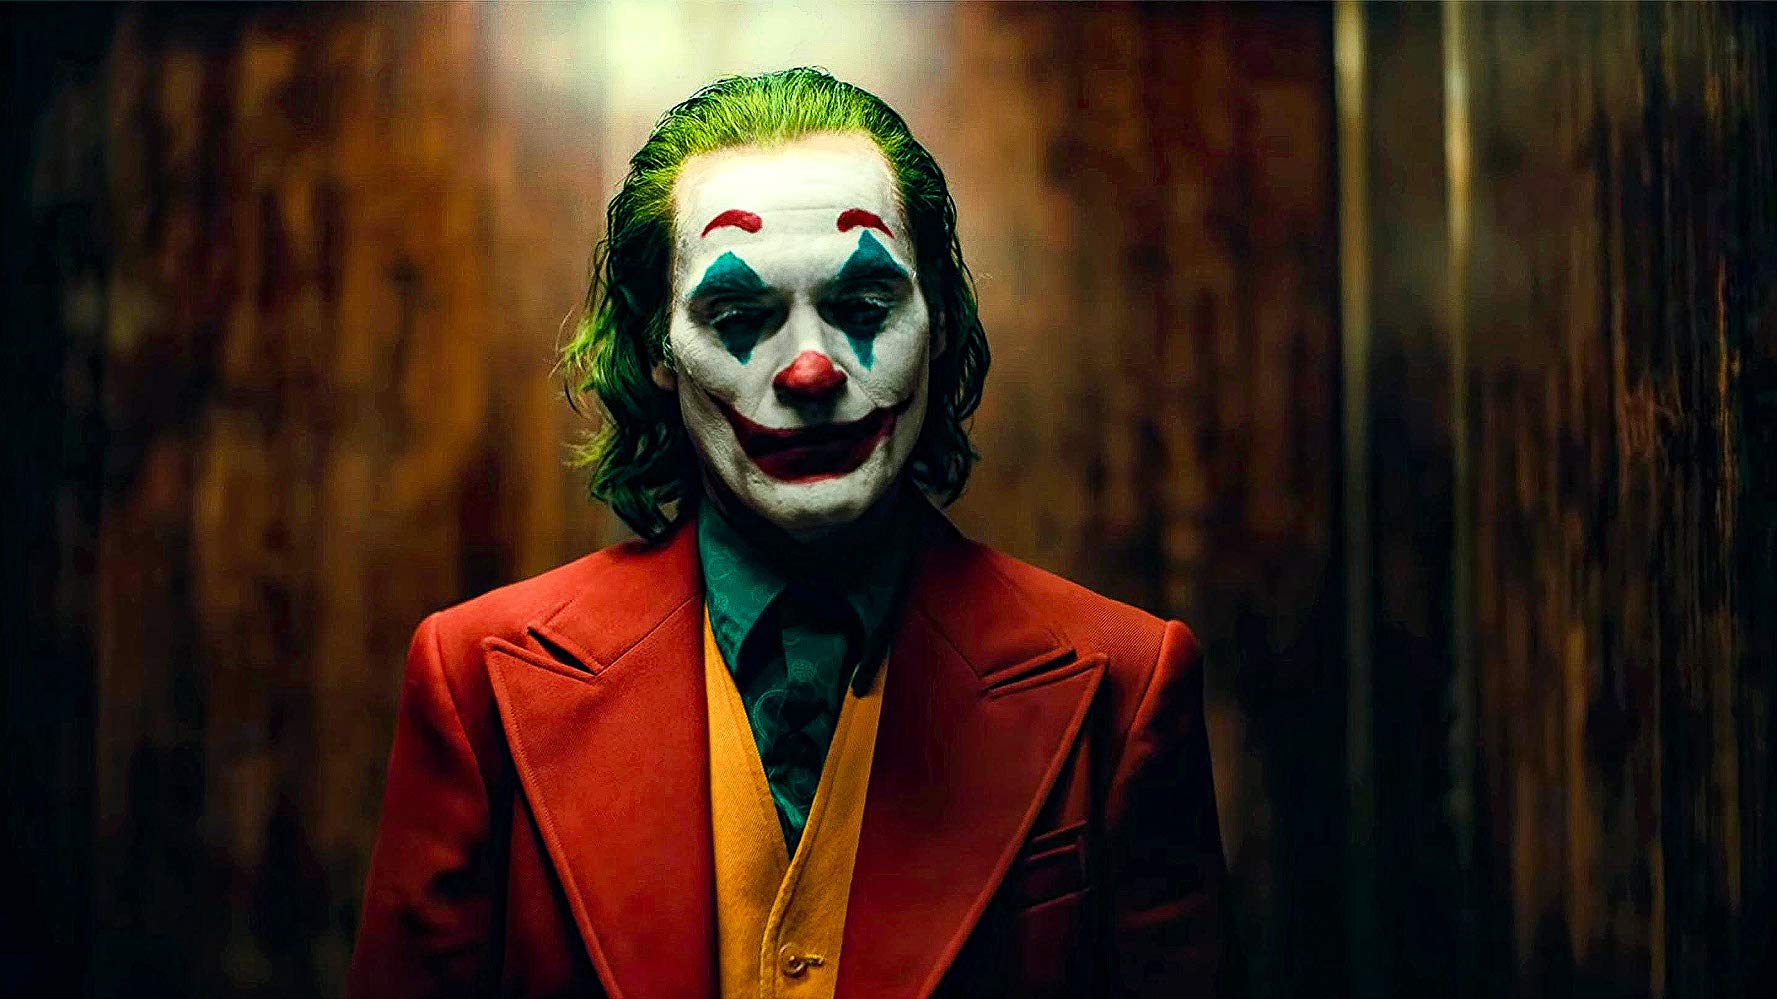 Arthur Fleck (Joaquin Phoenix) finally emerges as Joker (2019)